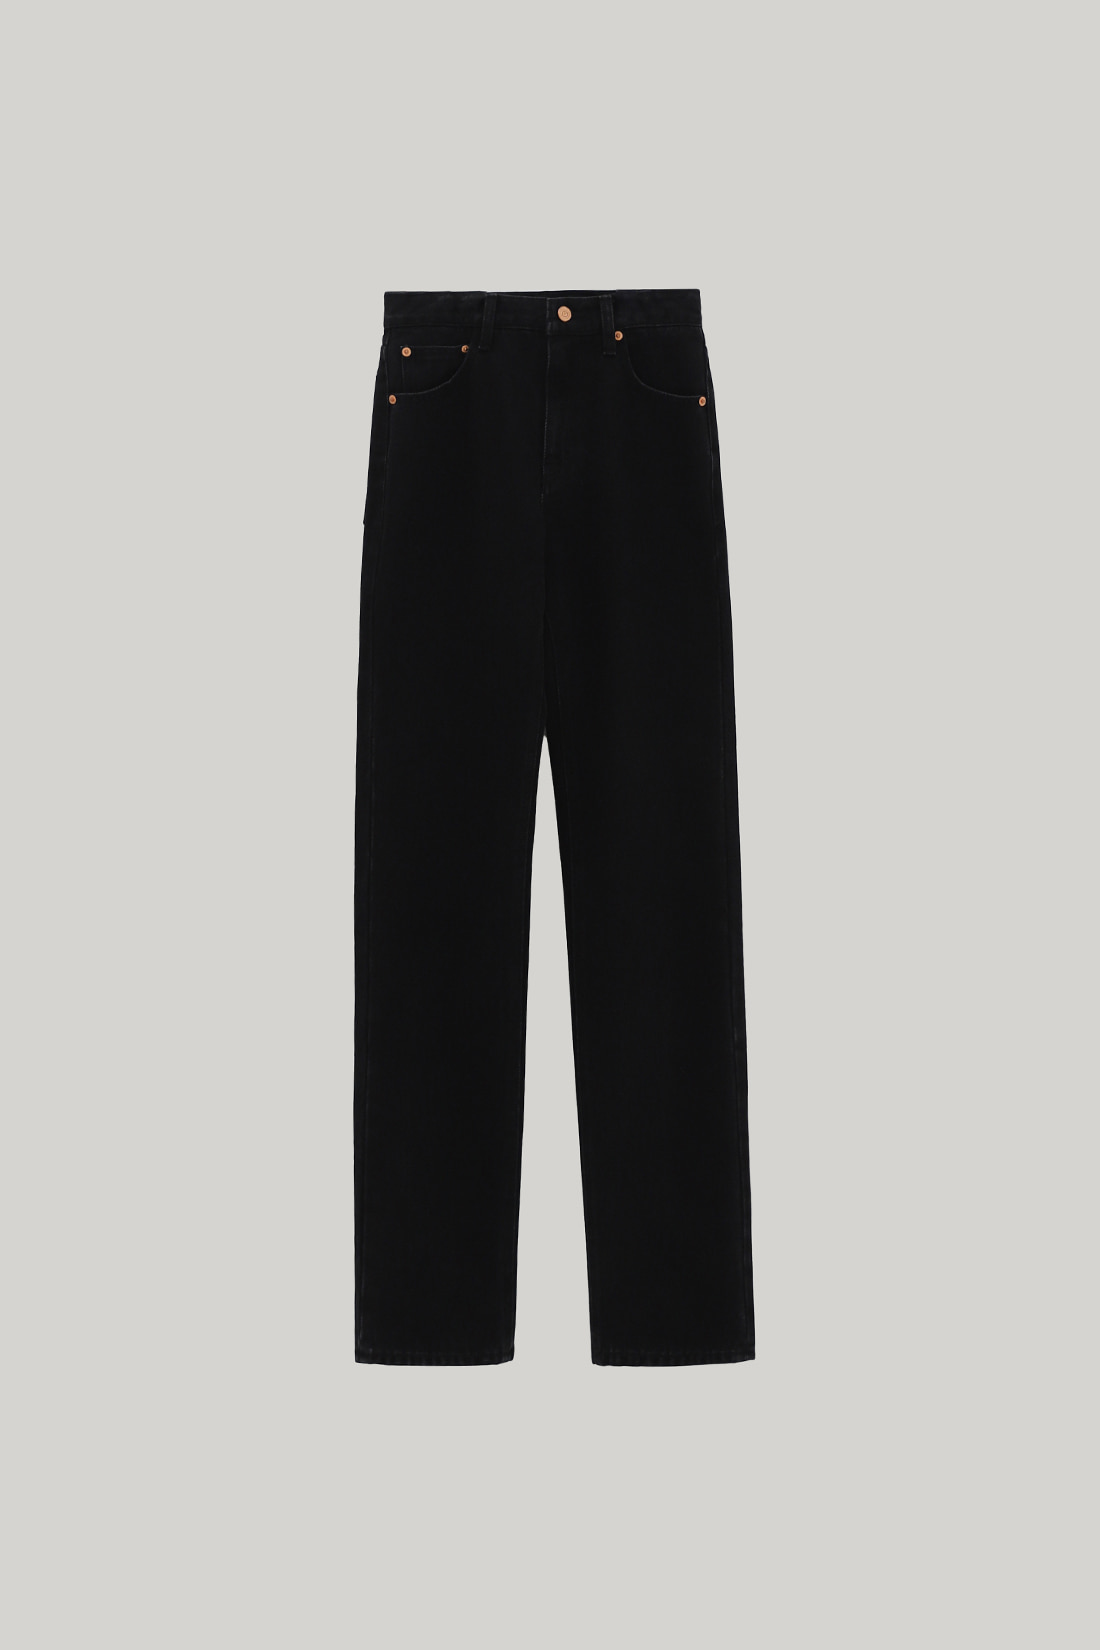 Maron Black Garment Jeans (Classic Black)